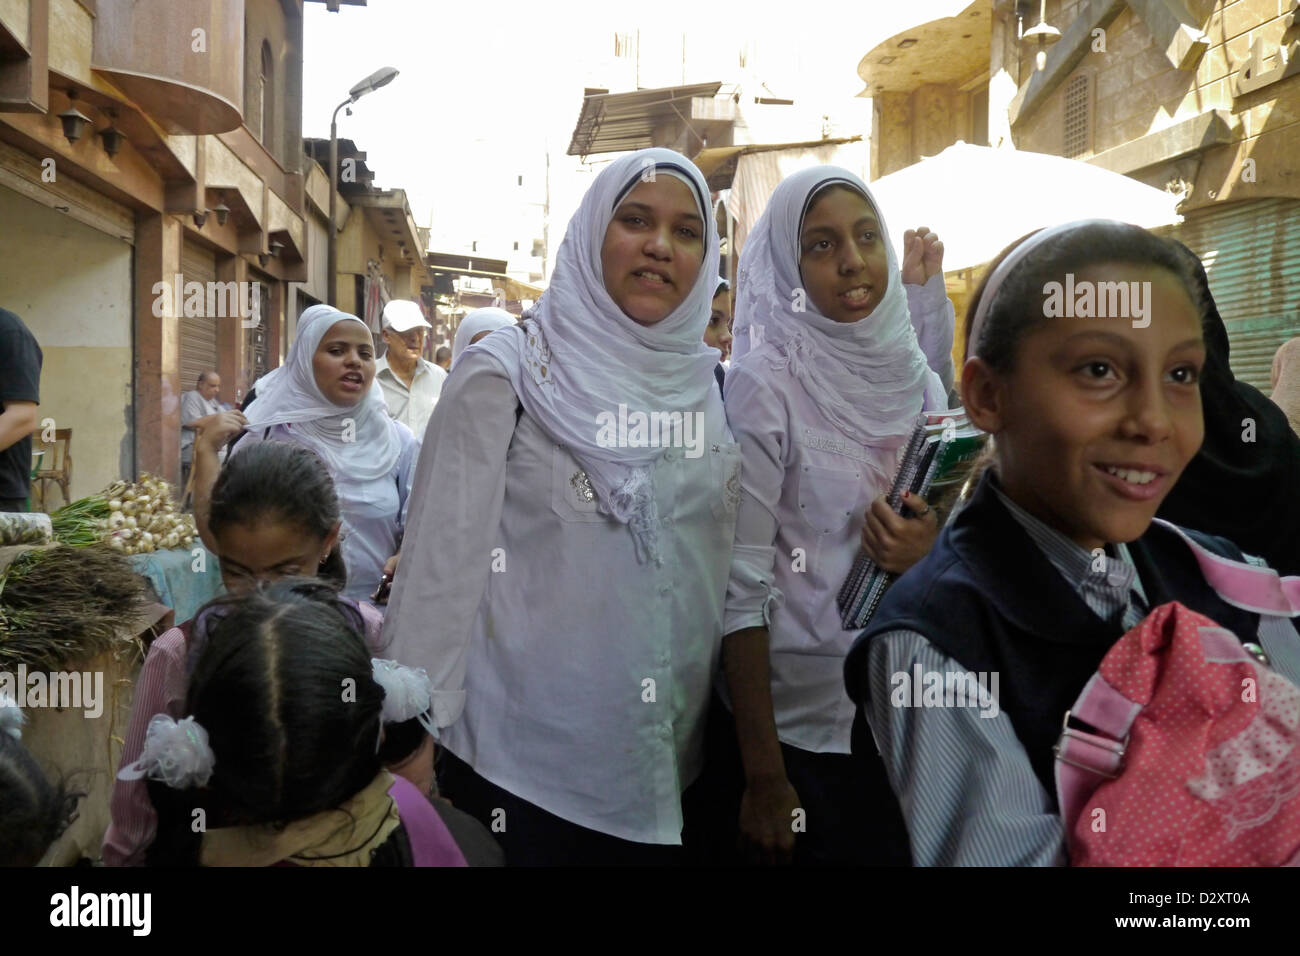 egypt street scenes so called islamic cairo old quarter city bab zuela school girls walking home 20120901 Stock Photo